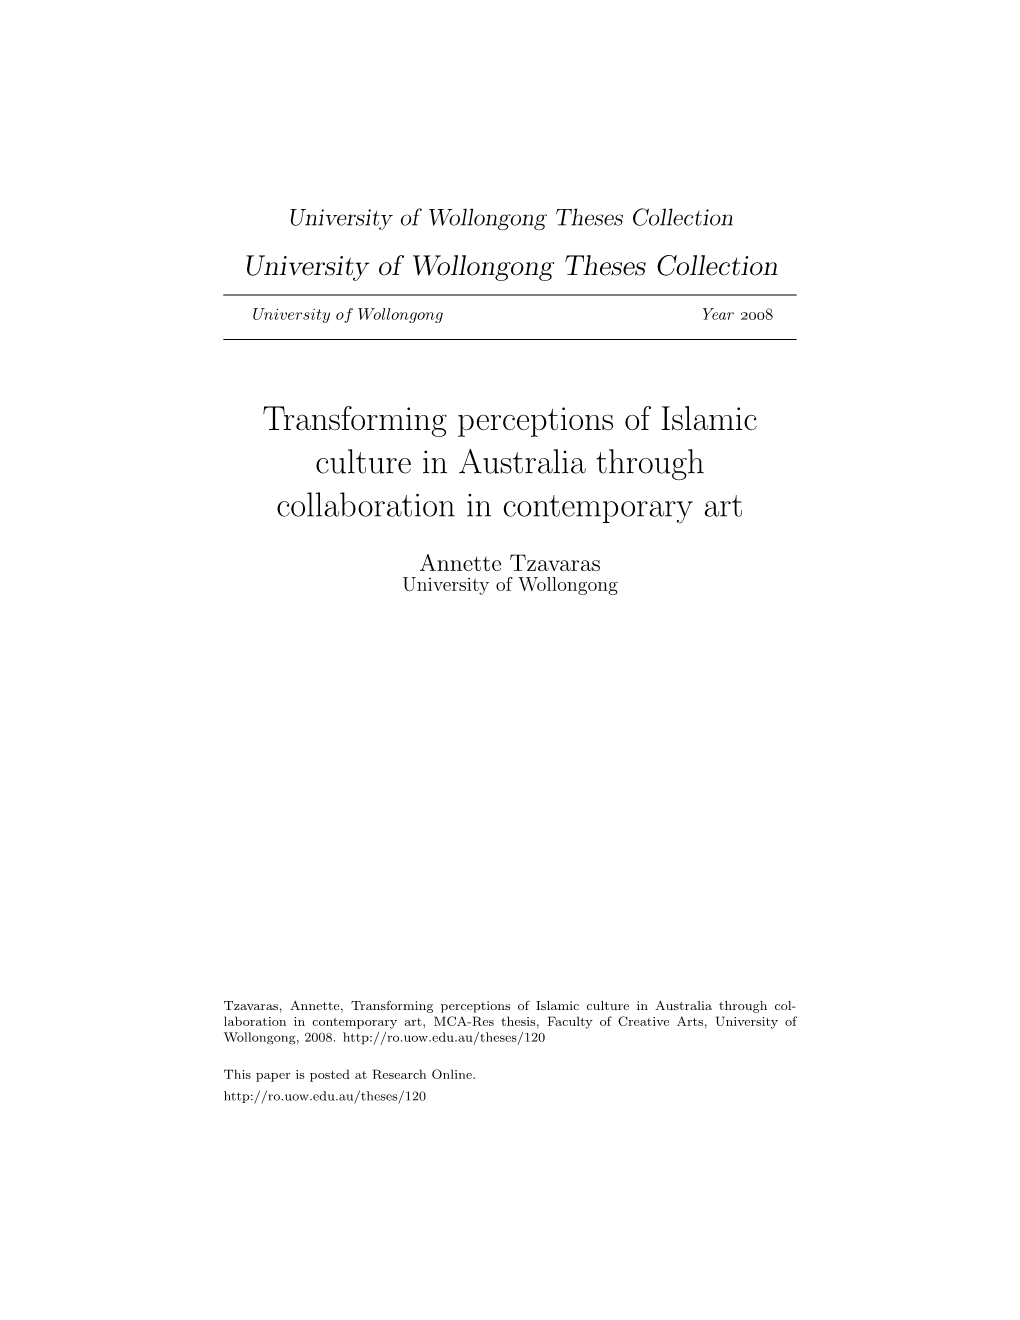 Transforming Perceptions of Islamic Culture in Australia Through Collaboration in Contemporary Art